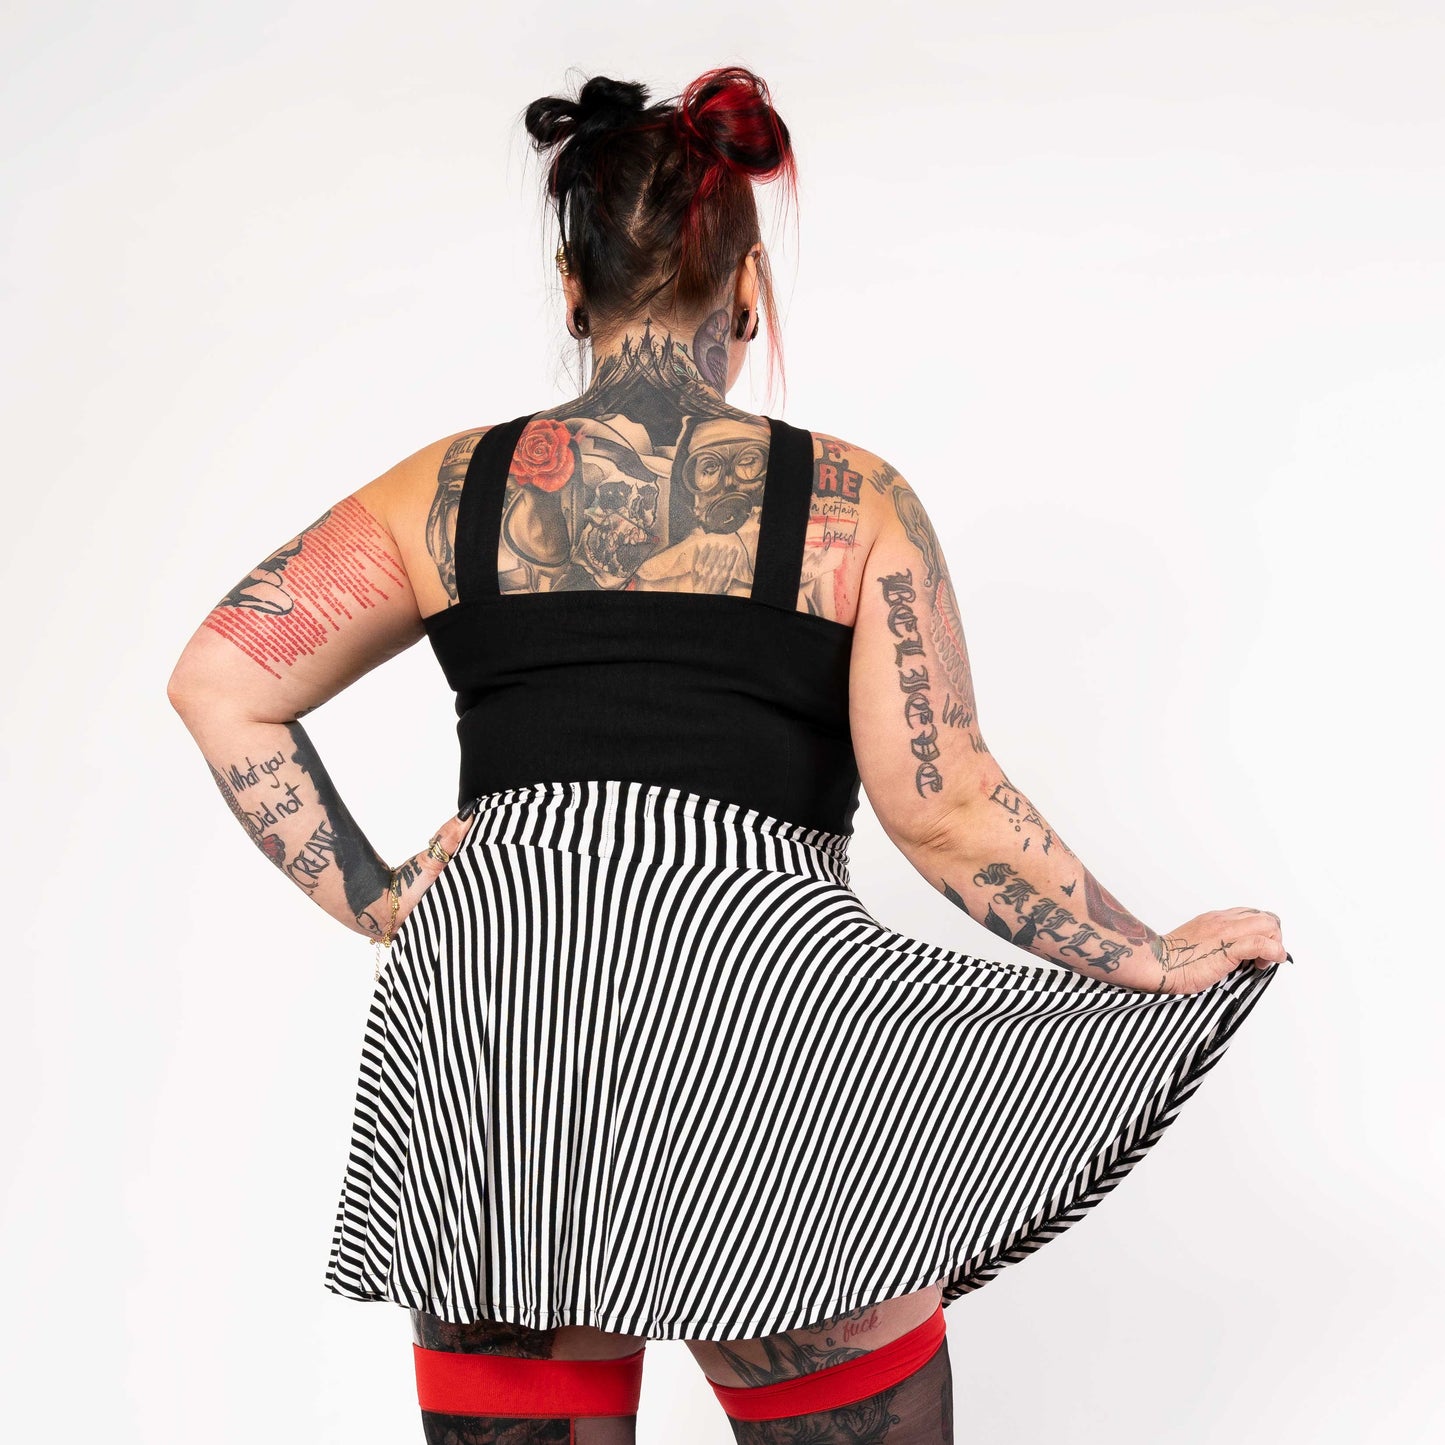 Why Bother skort (skirt with shorts) - black/white stripes